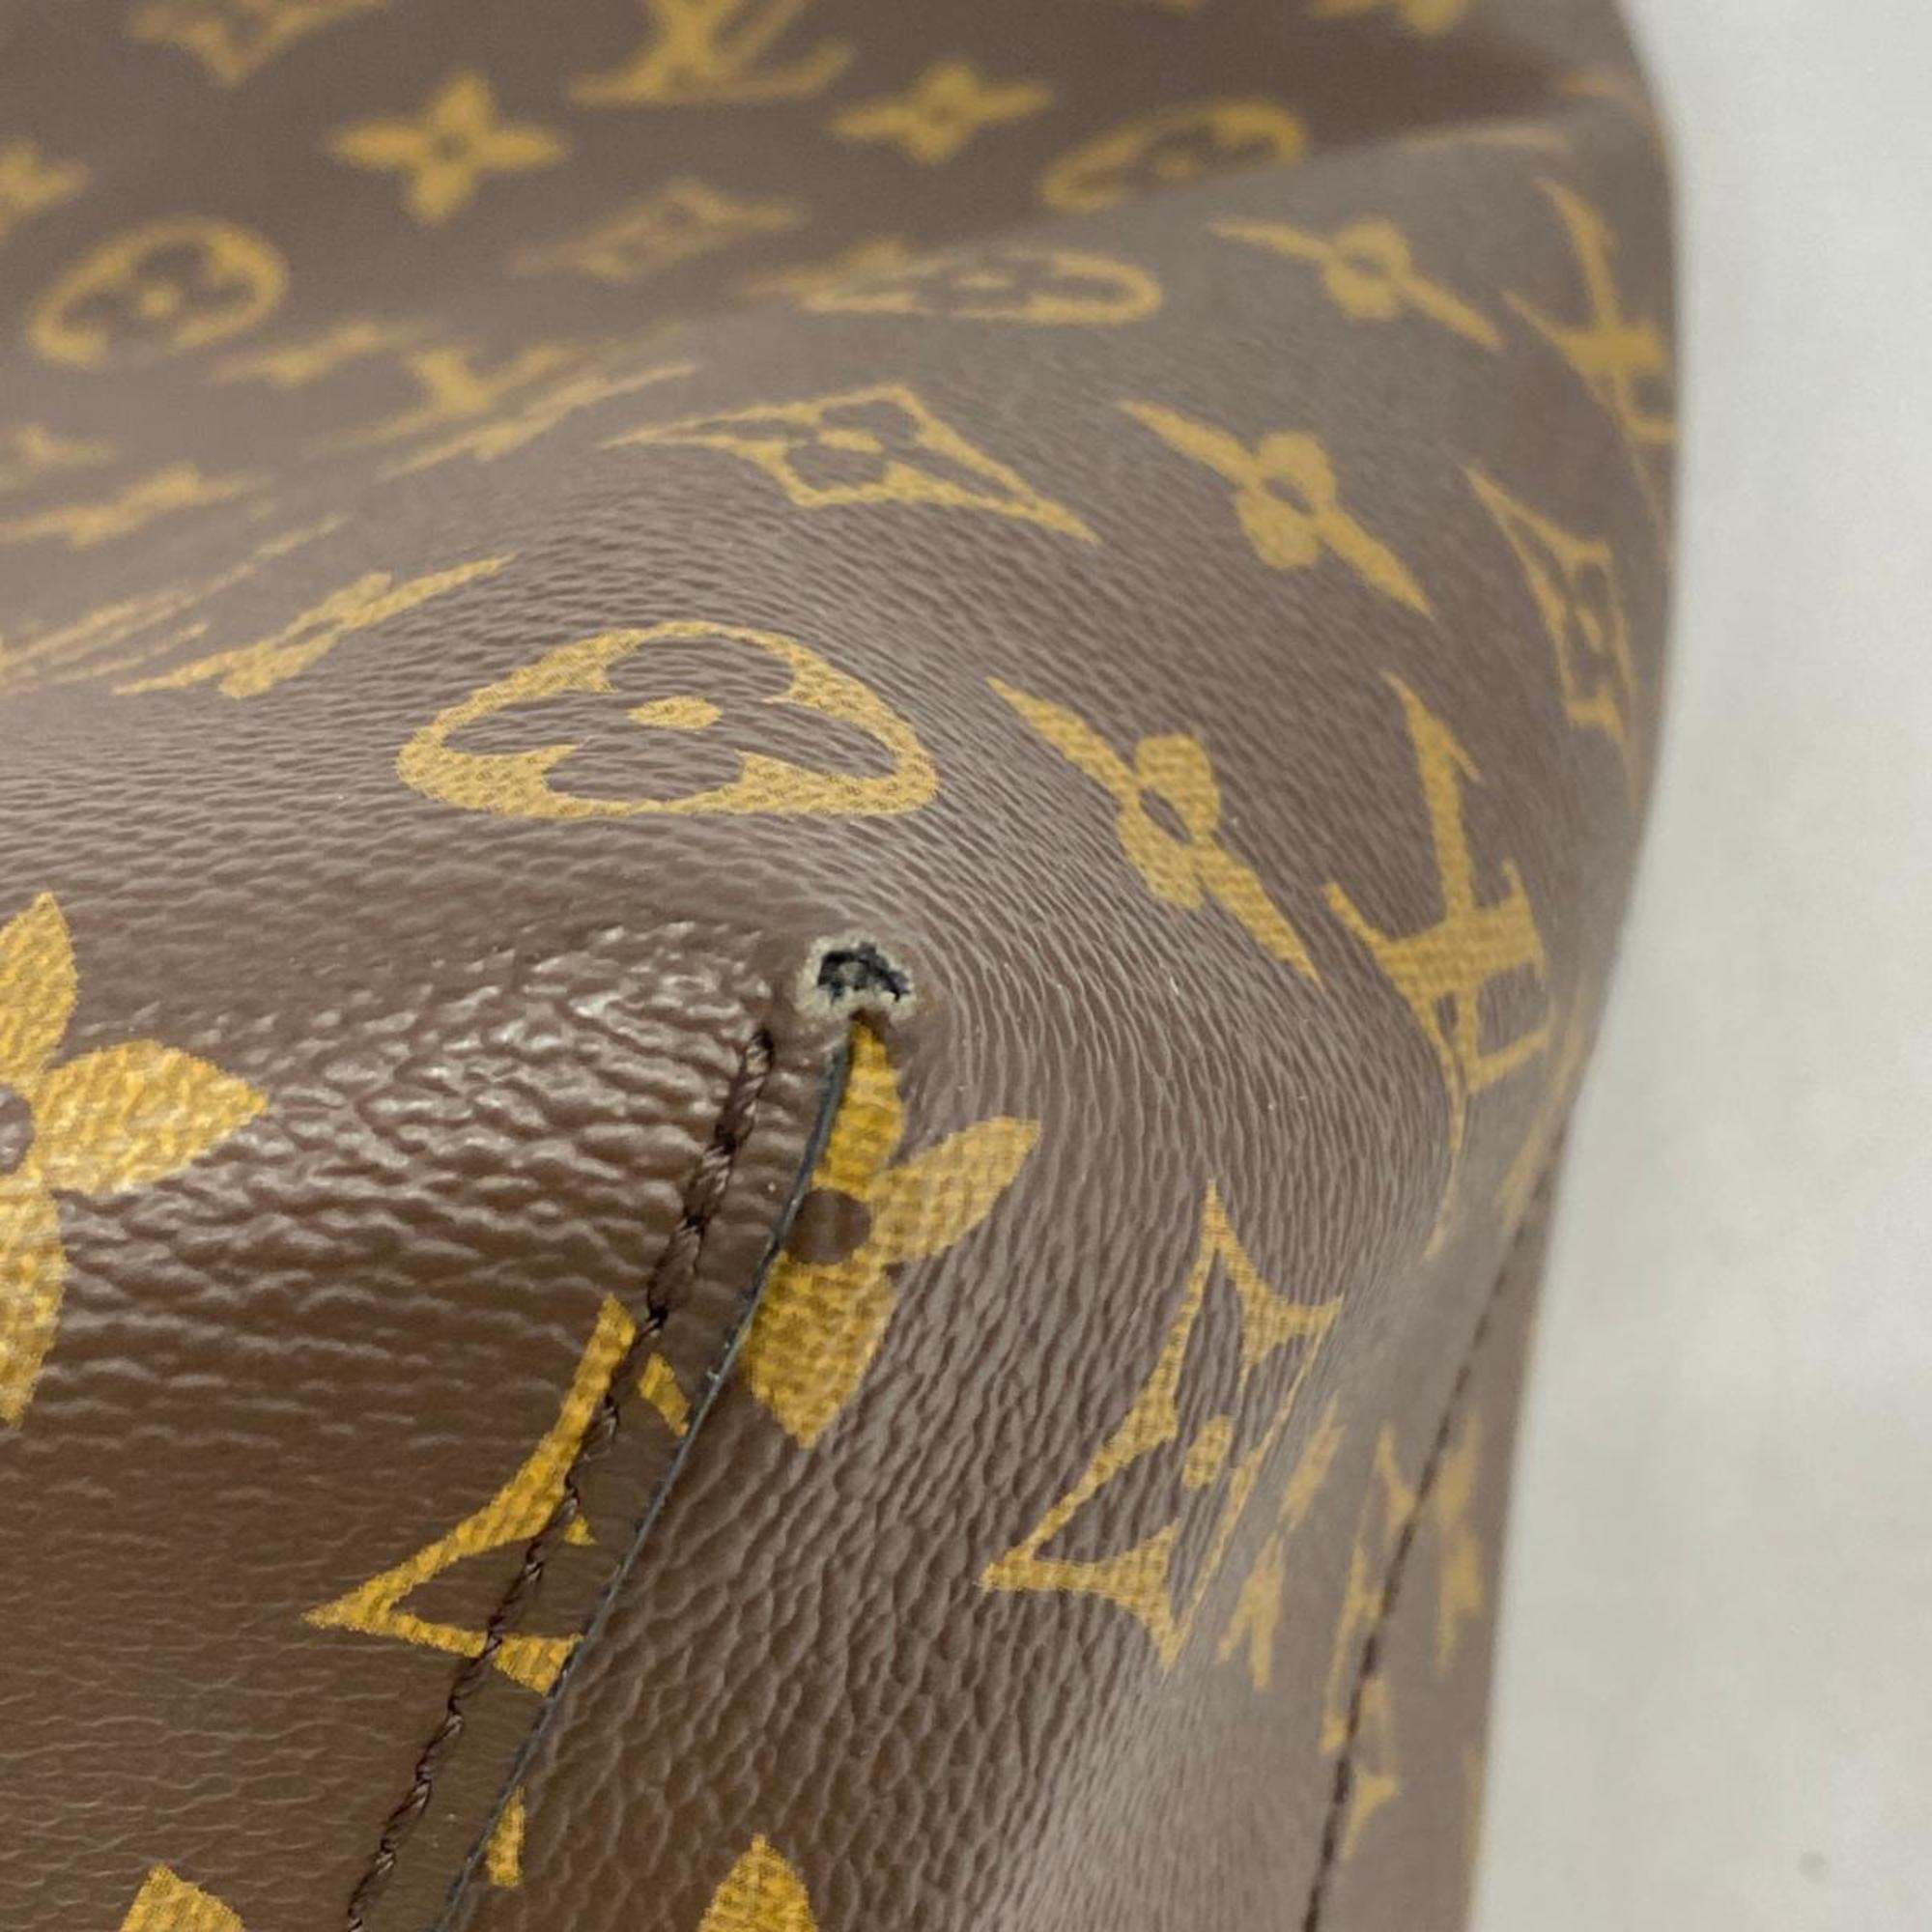 Louis Vuitton Shoulder Bag Monogram Flower Hobo M43630 Brown Coquelicot Ladies